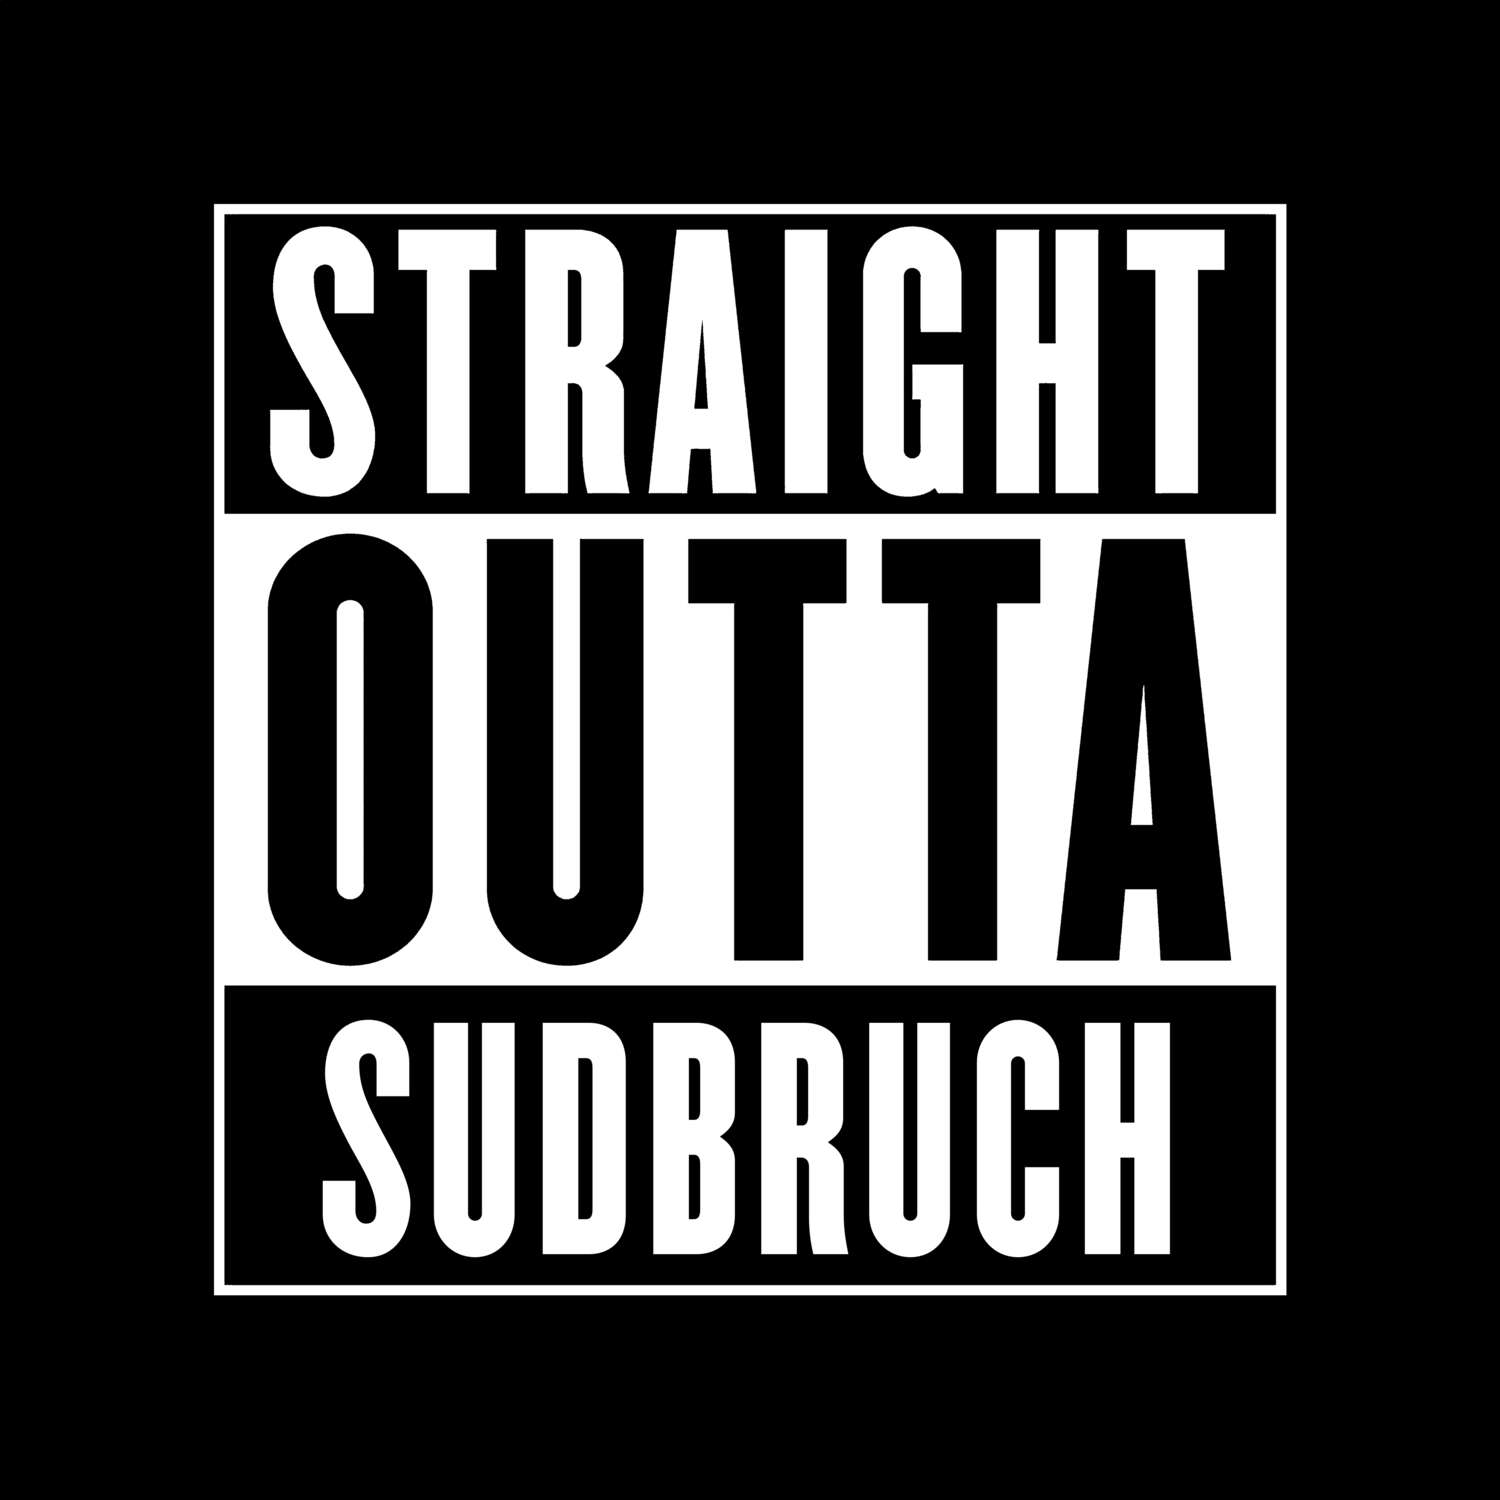 Sudbruch T-Shirt »Straight Outta«